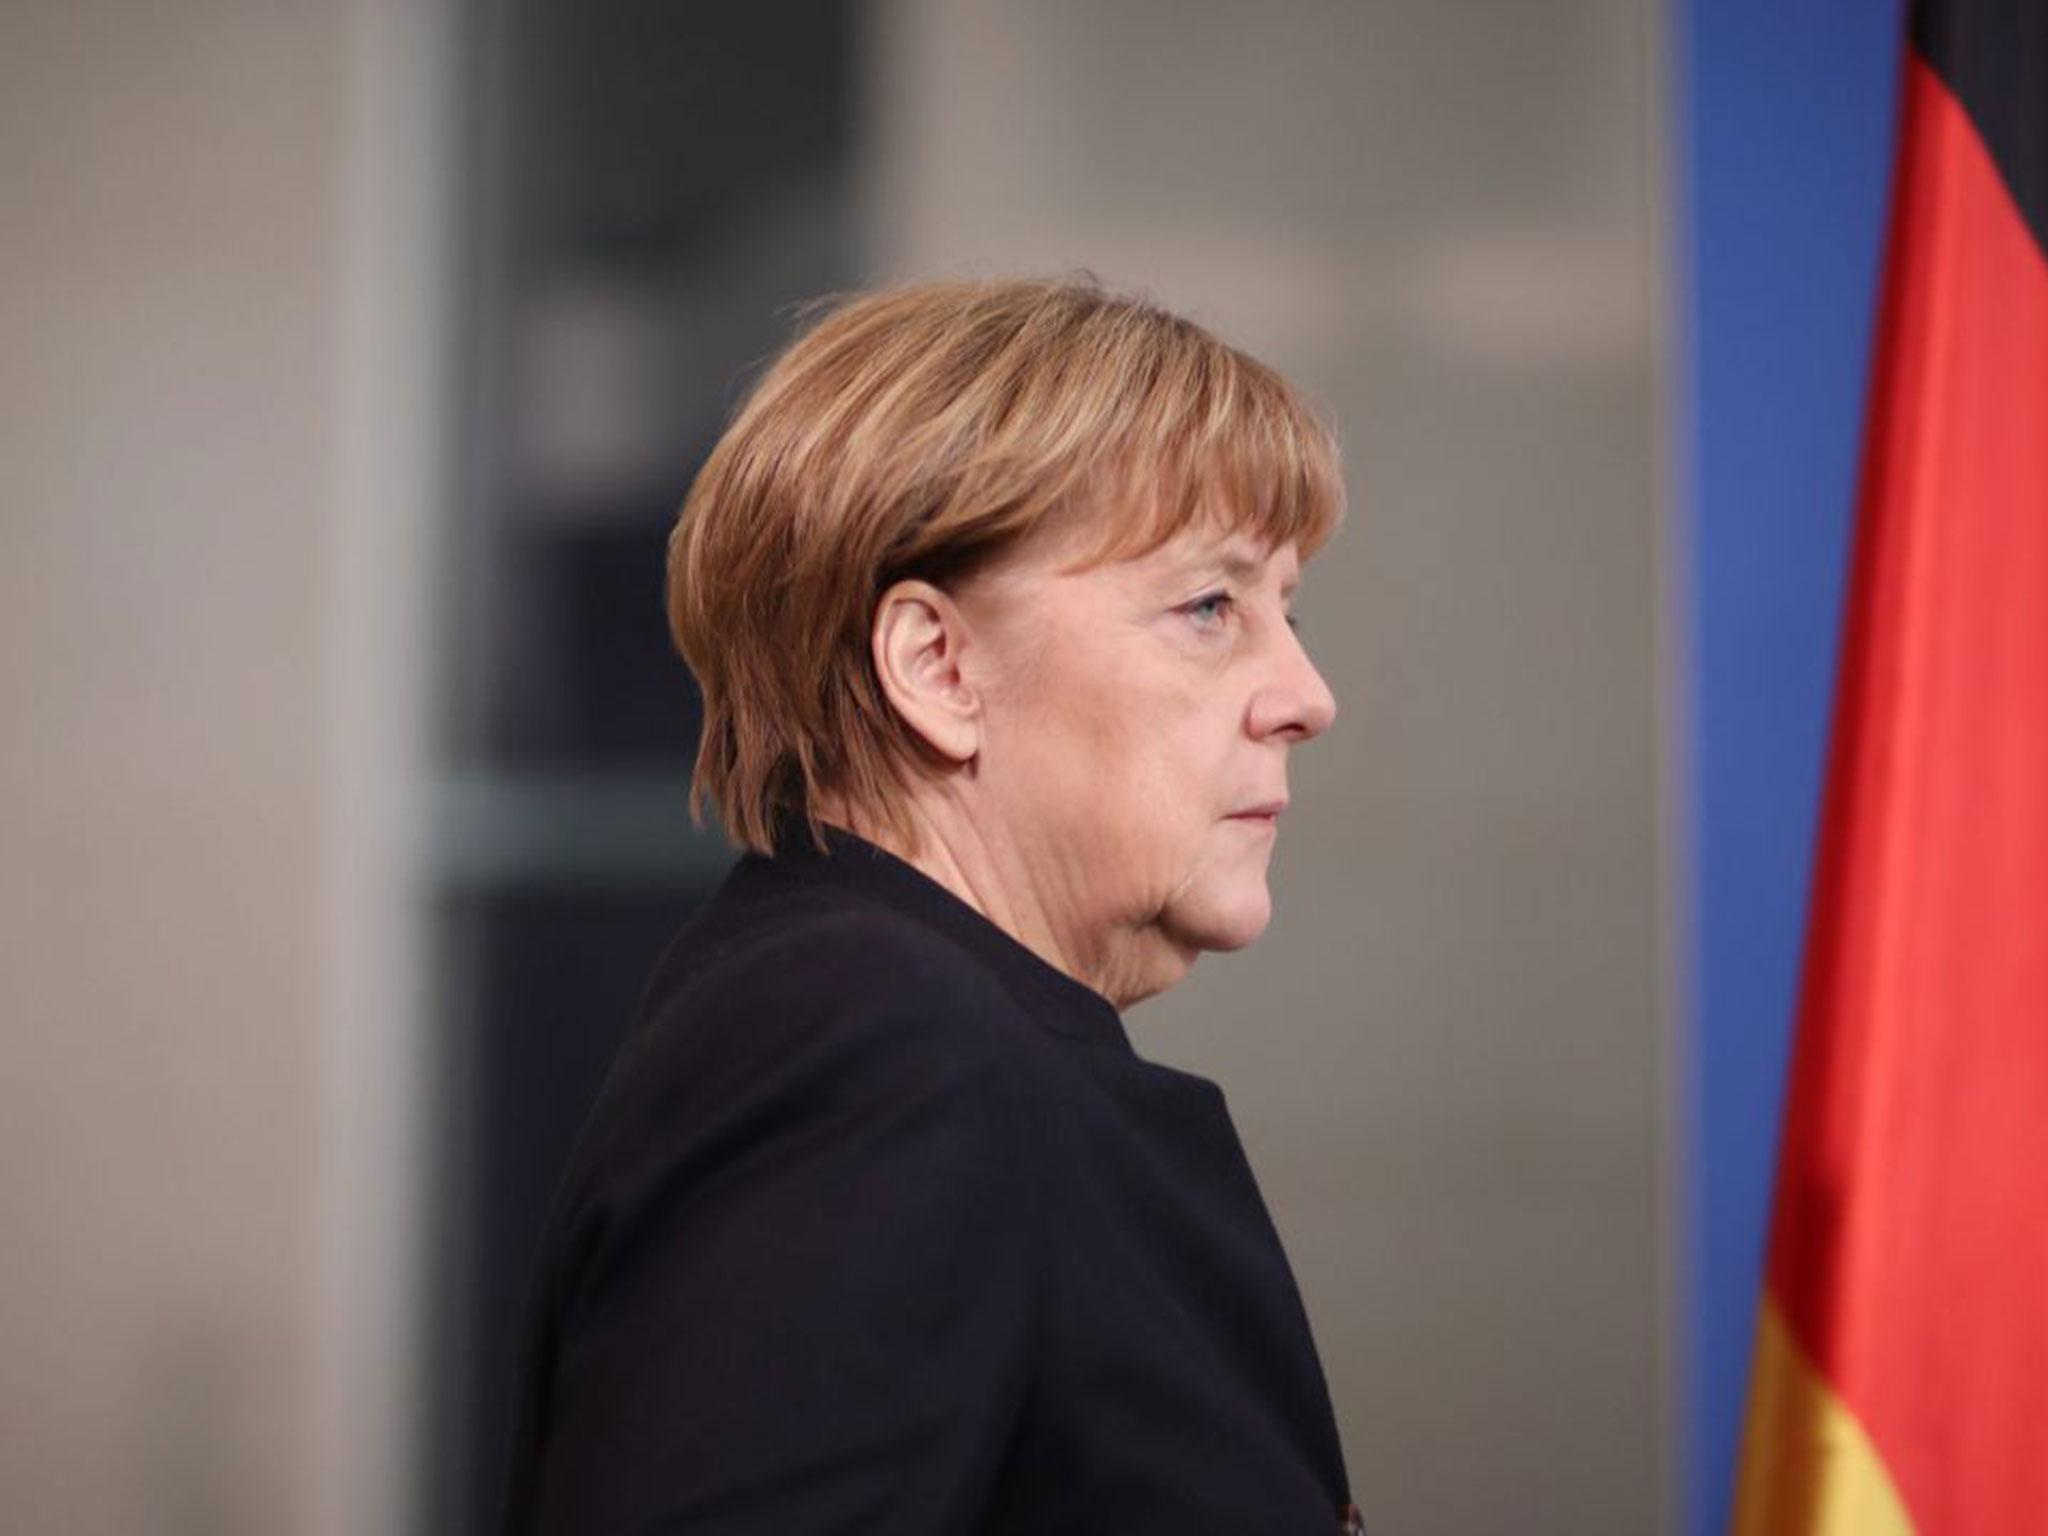 Germany's Angela Merkel attacks Donald Trump for targeting 'people